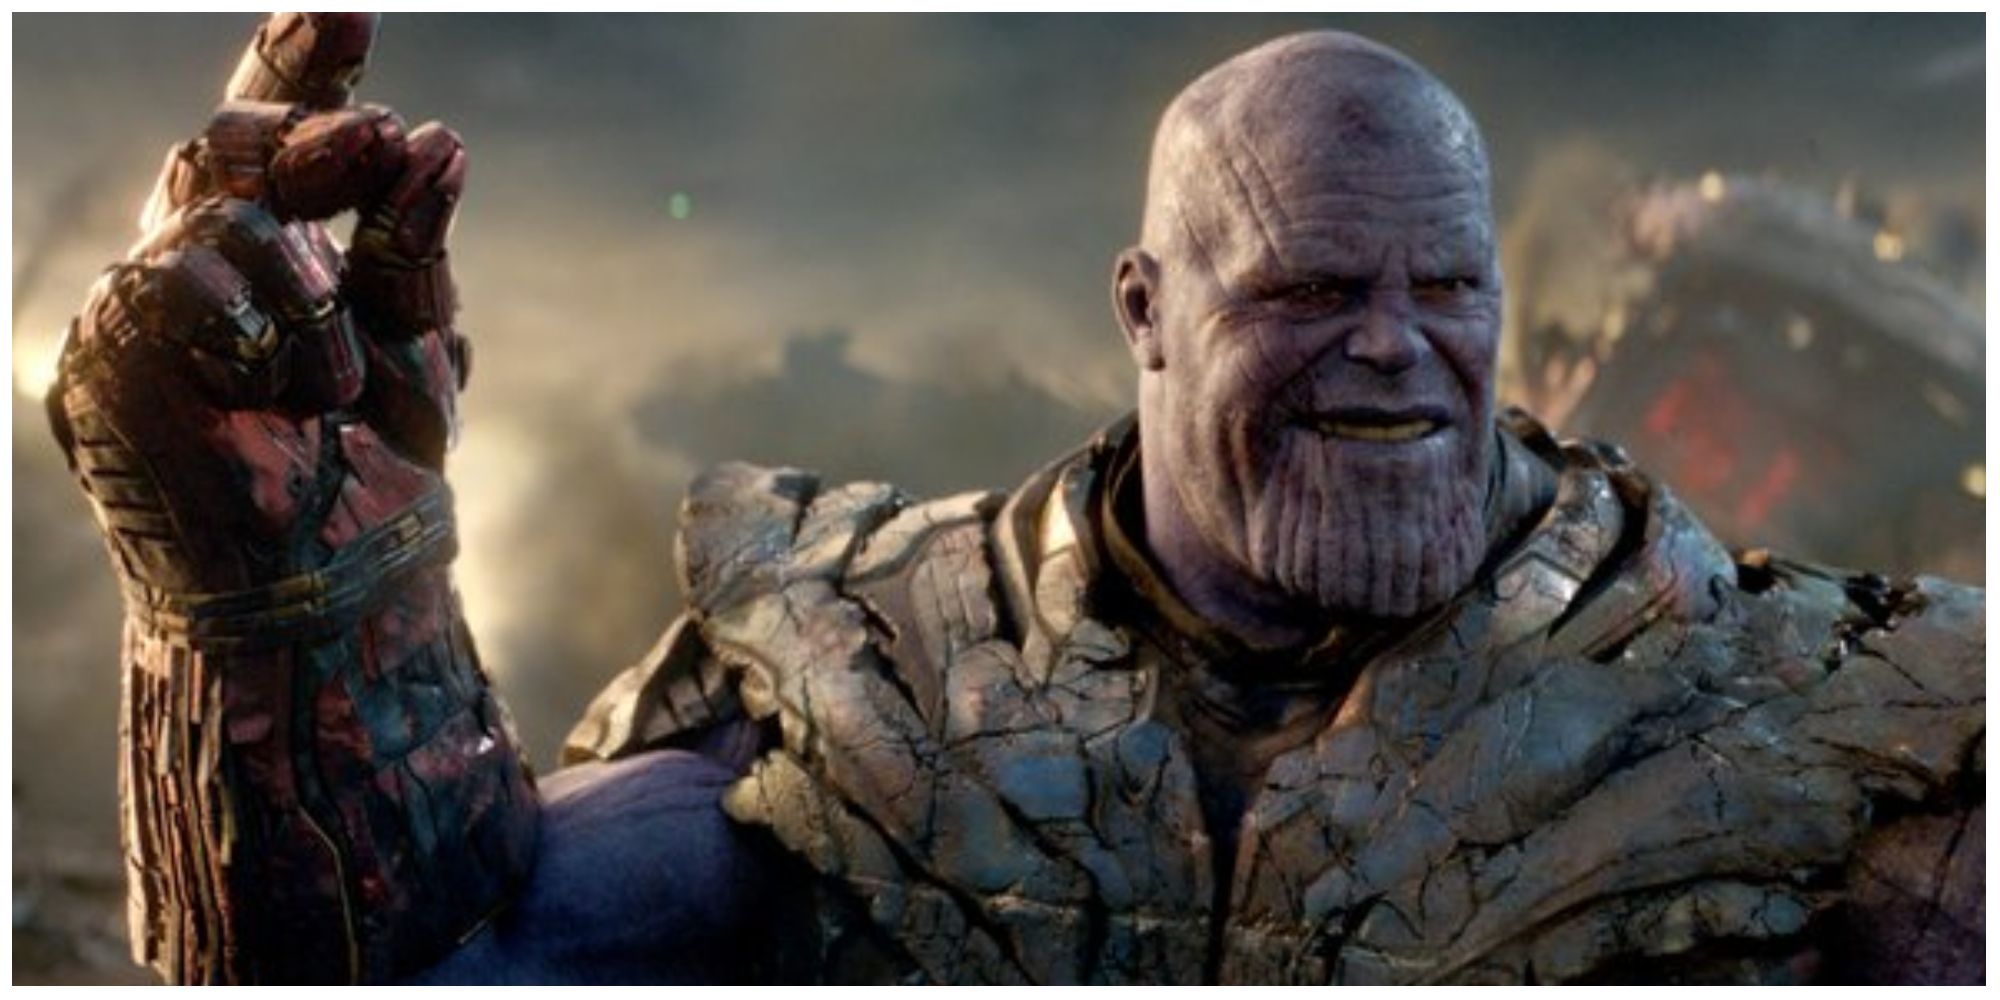 Thanos gets Avengers: Infinity War